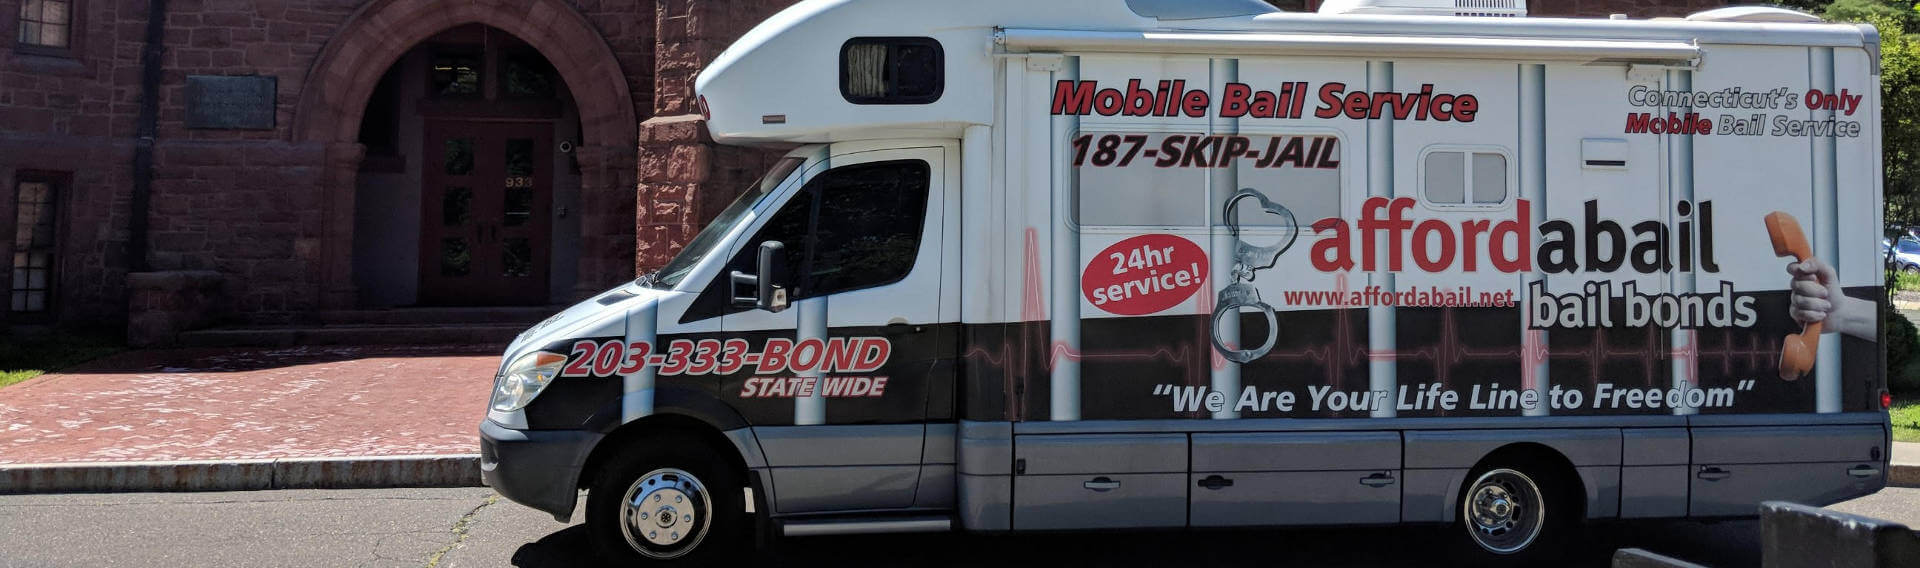 Mobile bail bonds service in Berlin CT